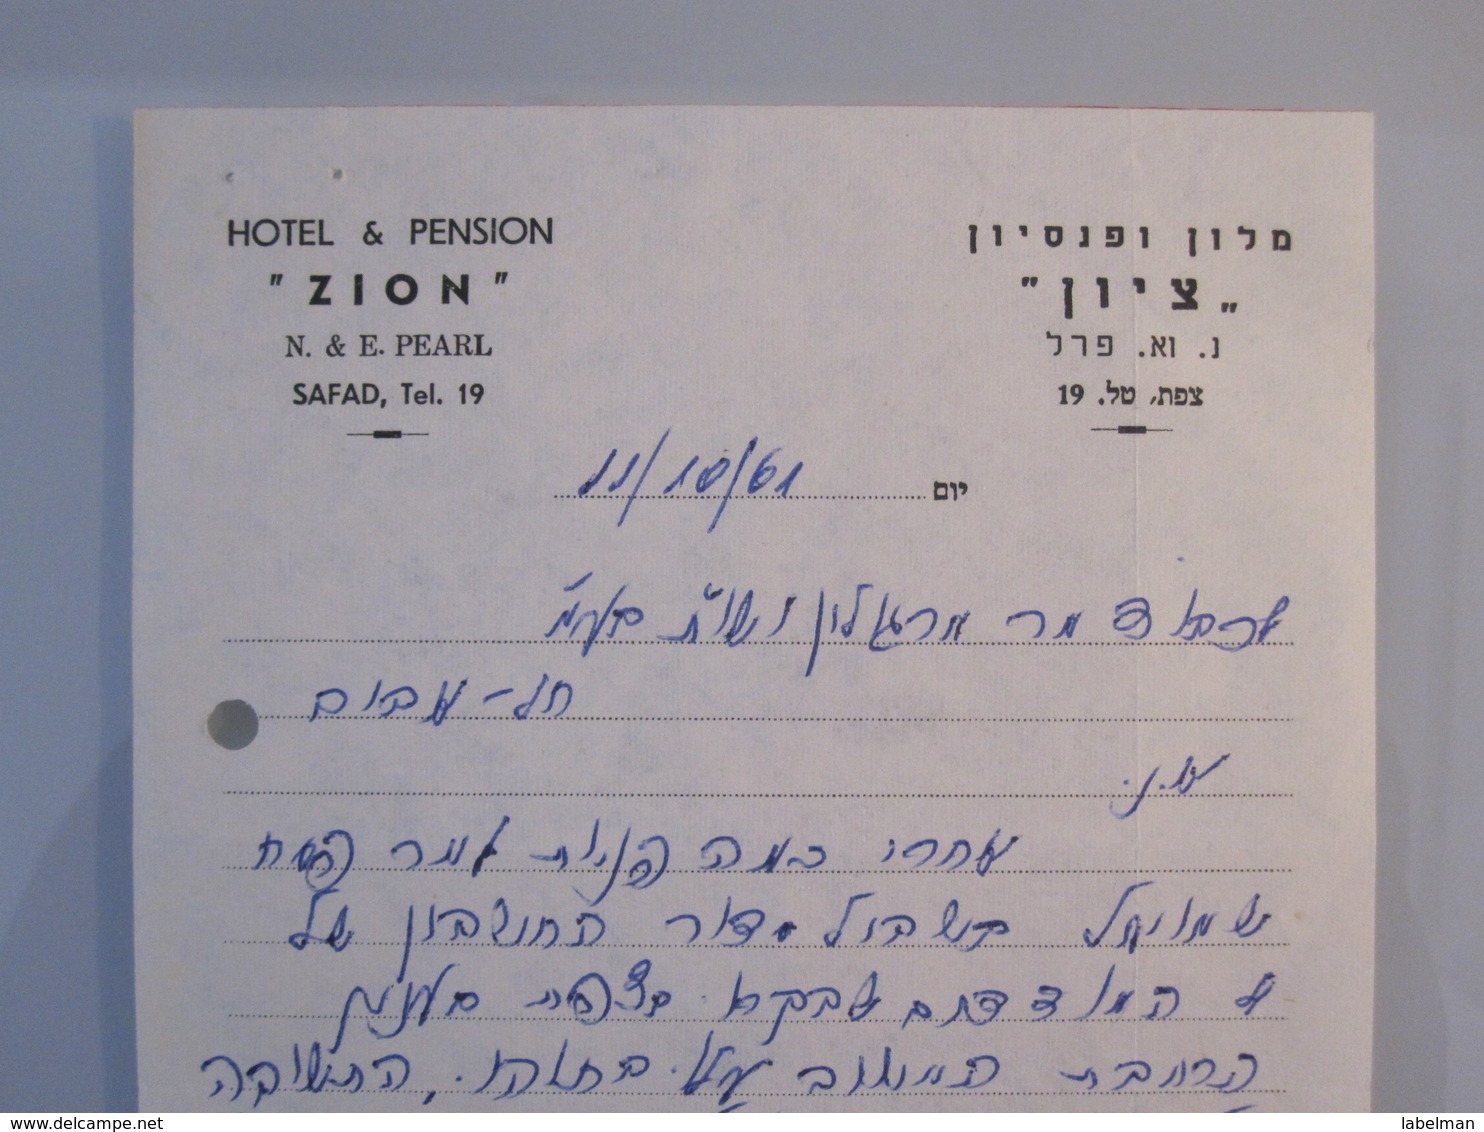 ISRAEL PALESTINE HOTEL PENSION REST GUEST INN HOUSE ZION PEARL SAFAD BILL INVOICE VOUCHER - Manuscripts